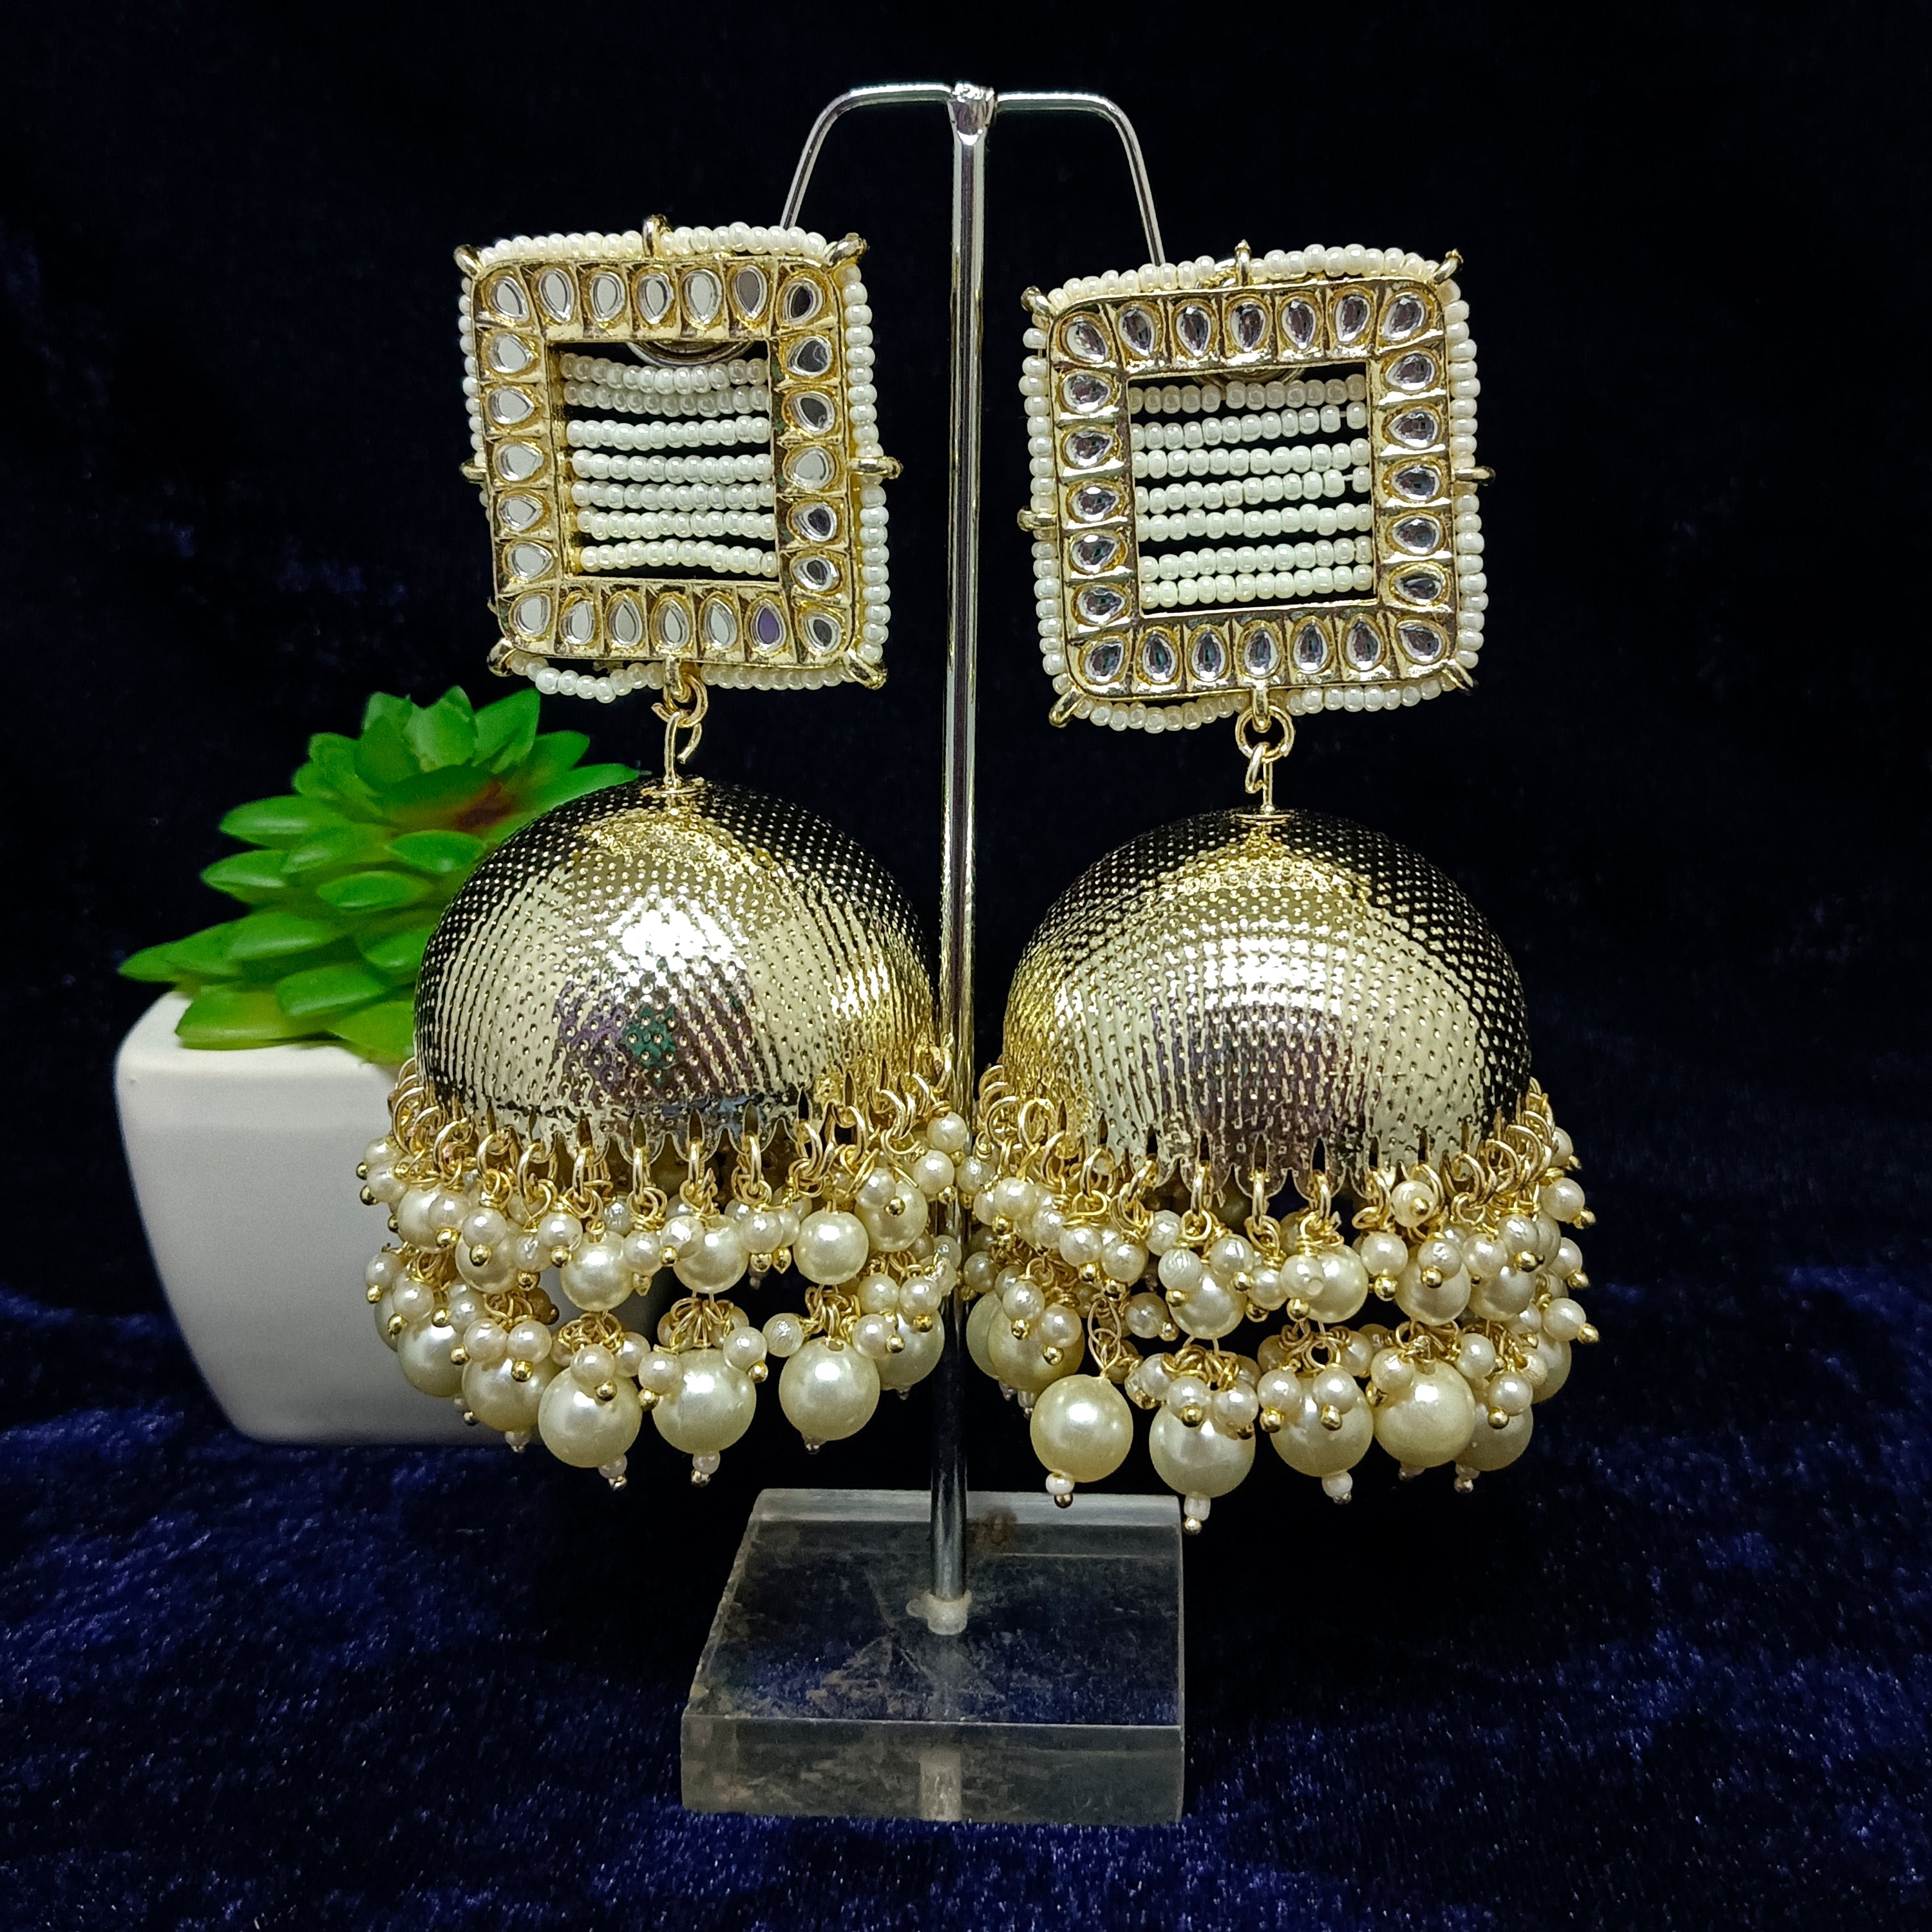 Bhavi Jewels Gold Plated Meenakari Jhumki Earrings